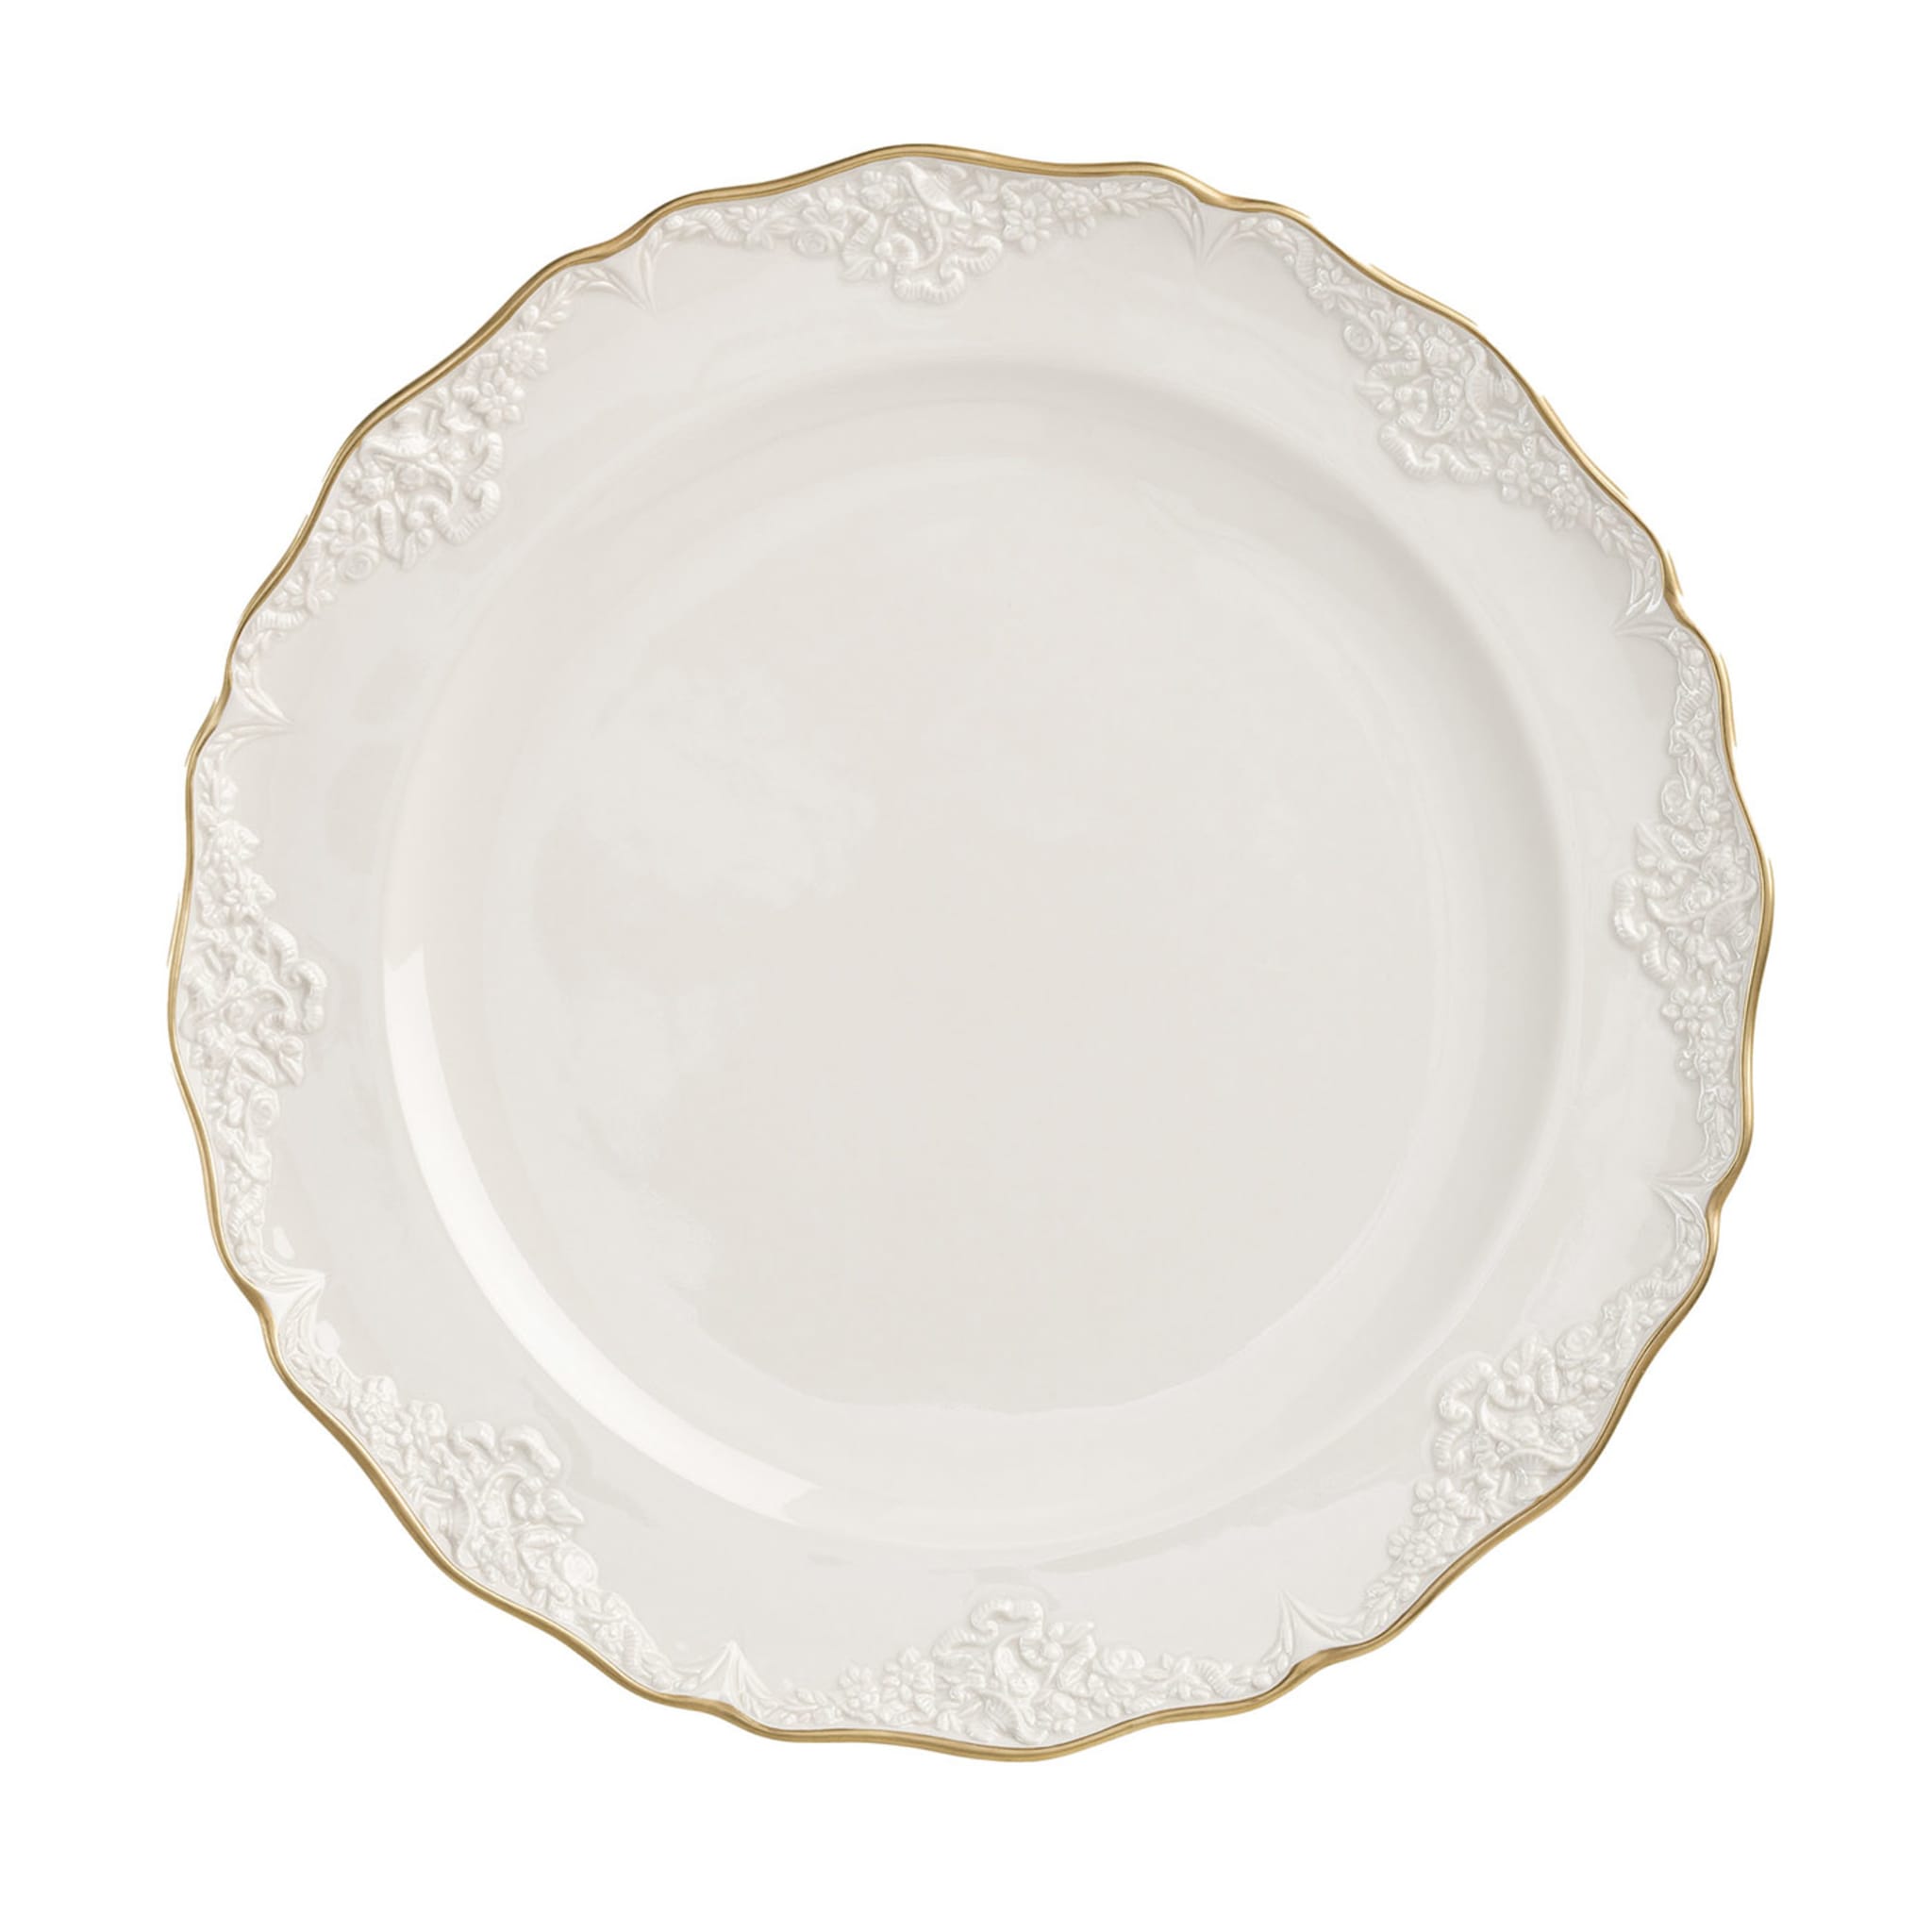 Irene Set of 2 Large White & Gold Dinner Plates - Main view